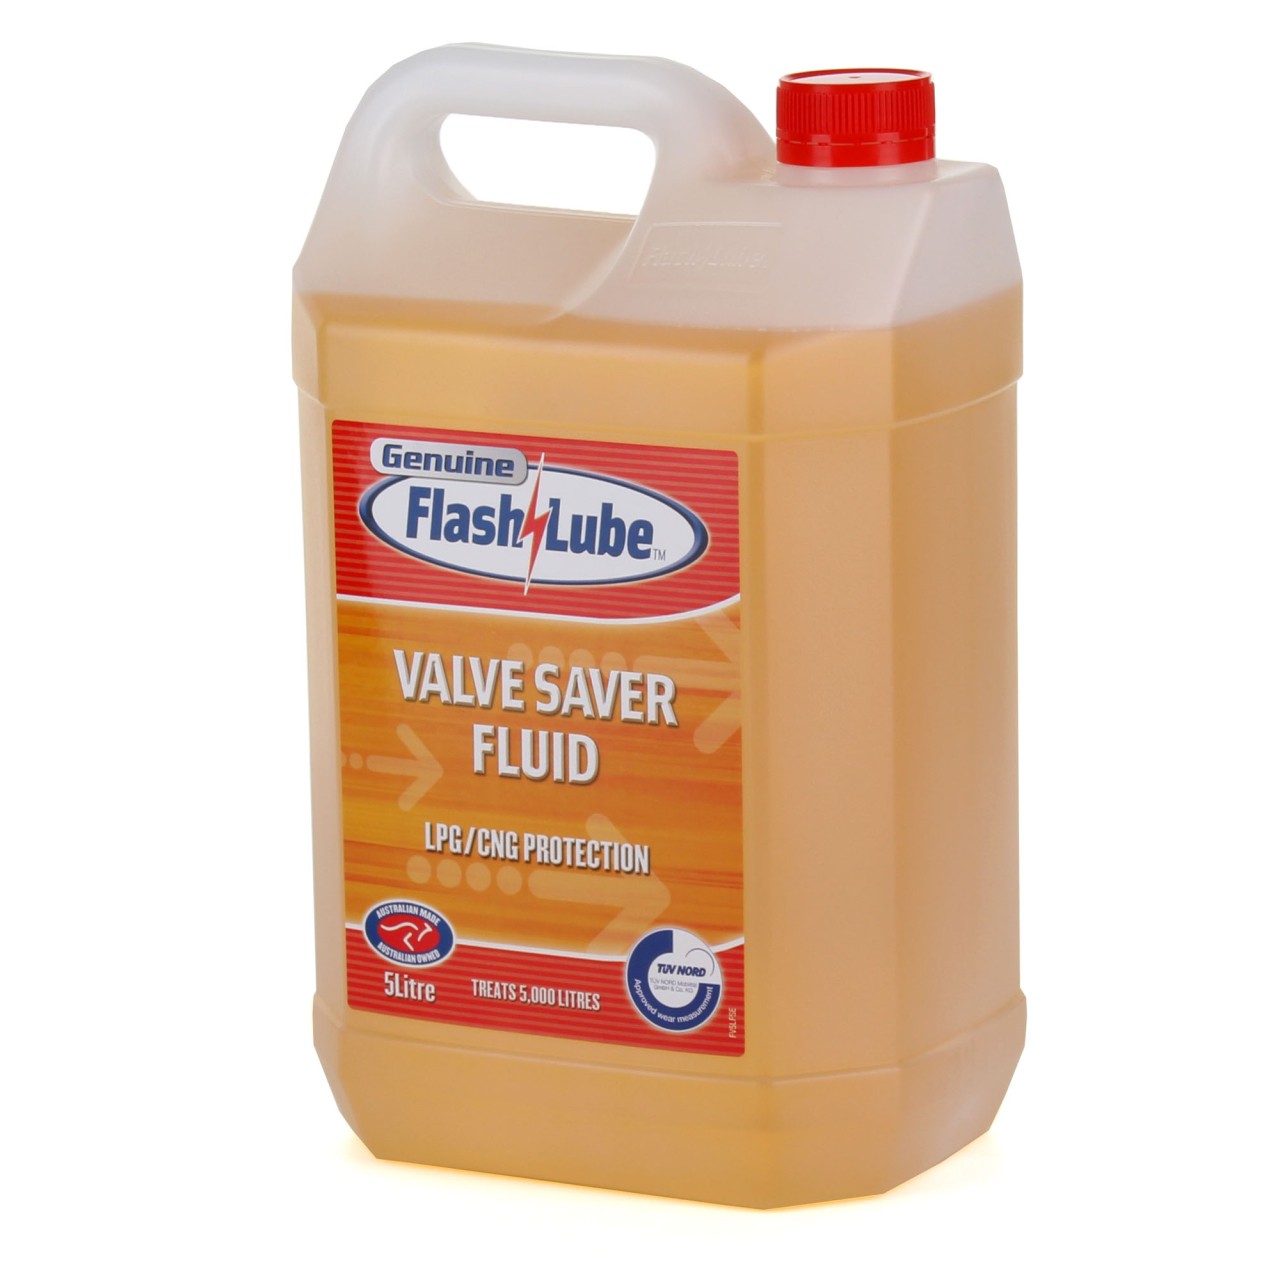 5 liter flashlube valve saver fluid FV5L 9316889011046 LPG/CNG Protection